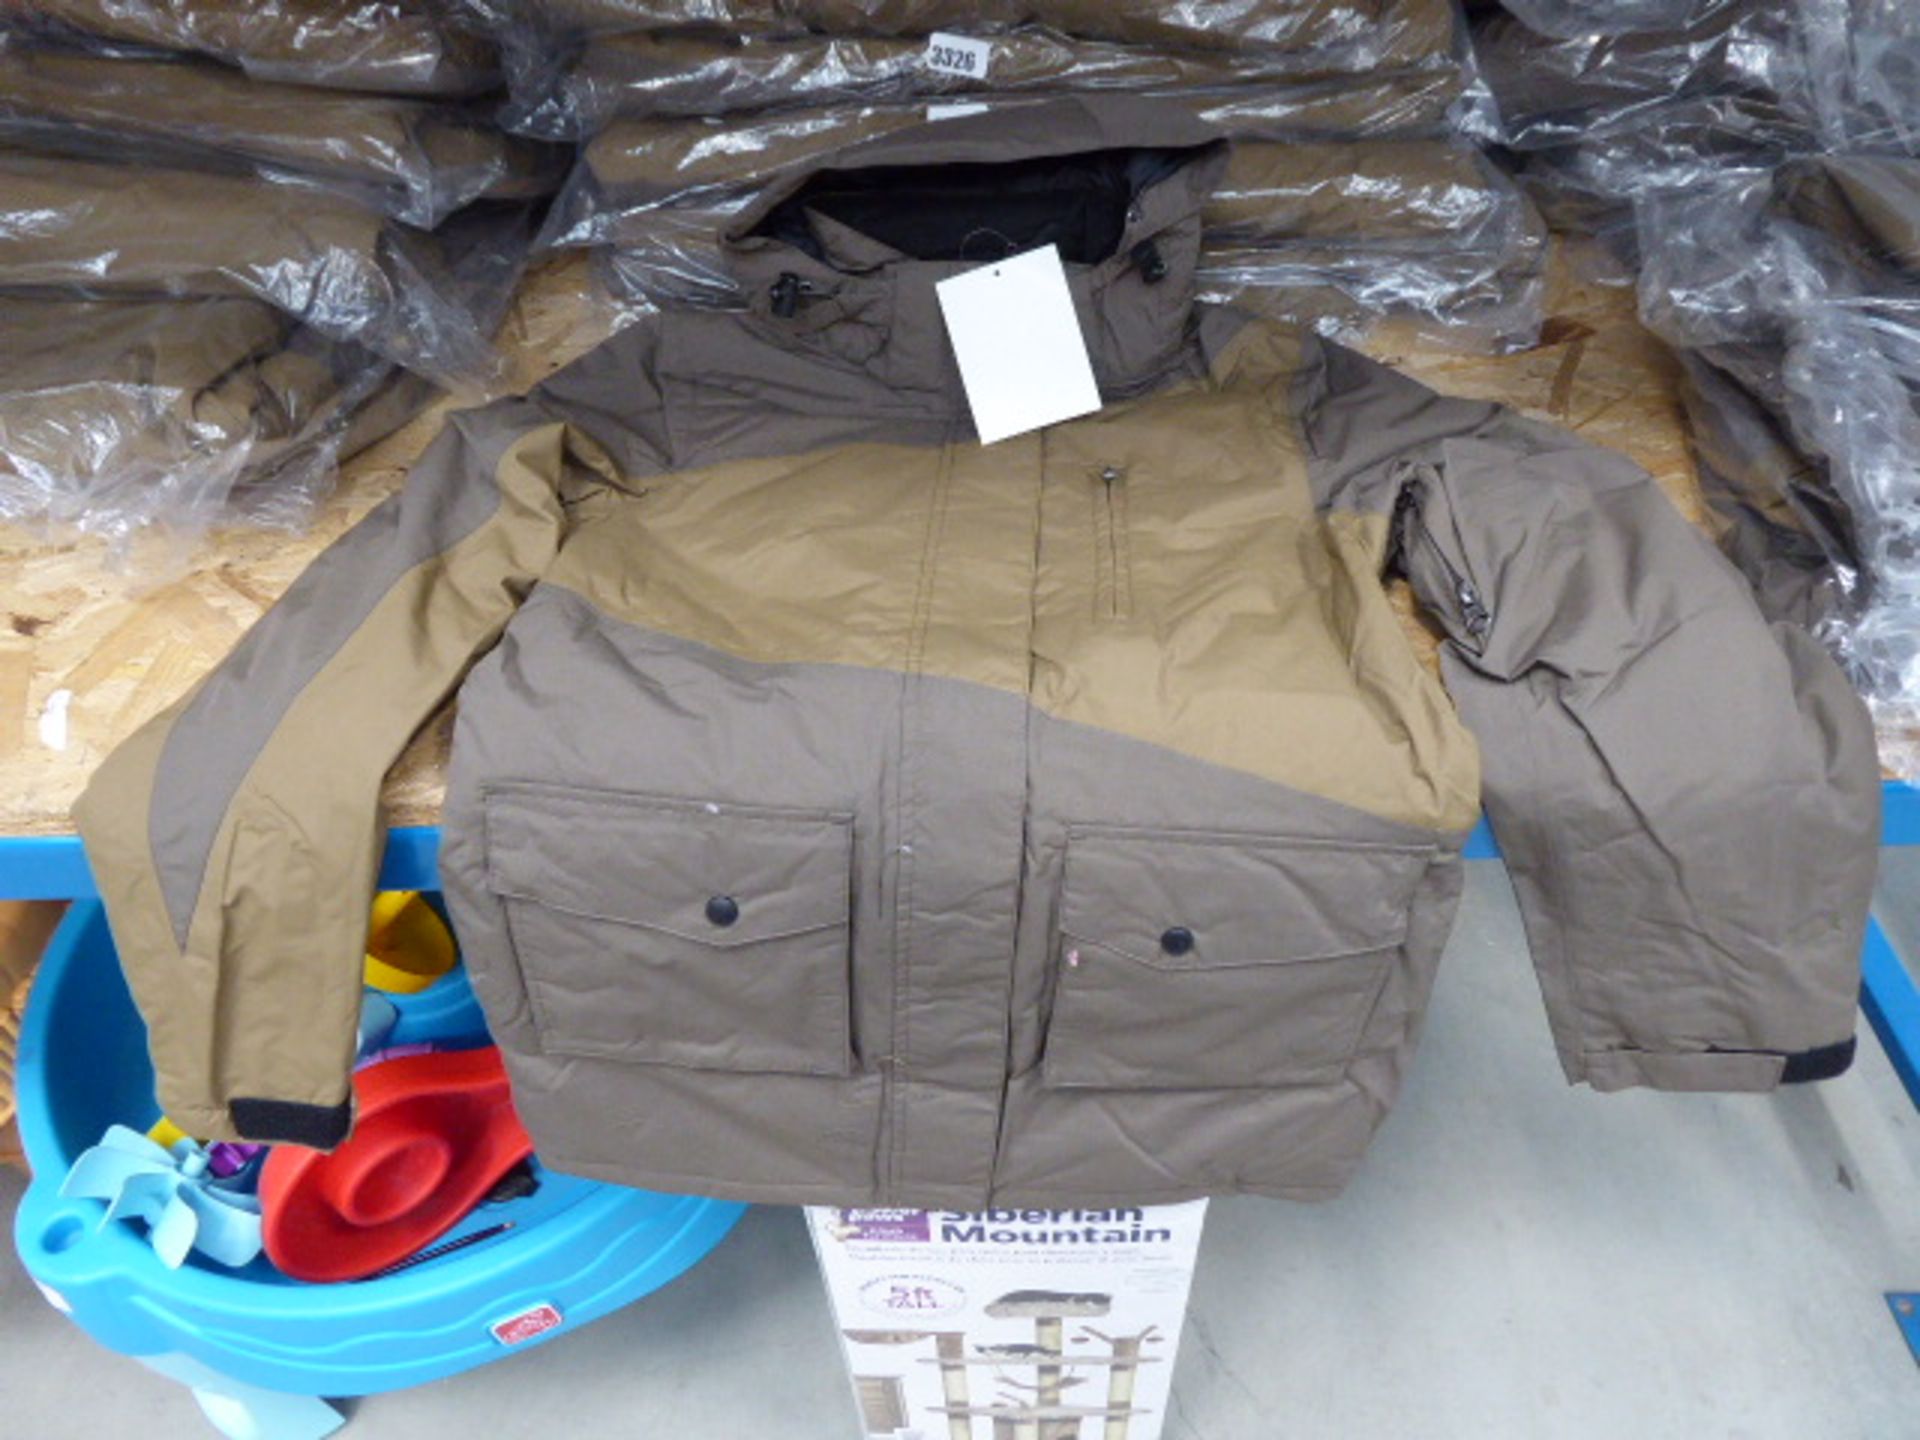 Full zipped hooded Rod & Gun coat sized large